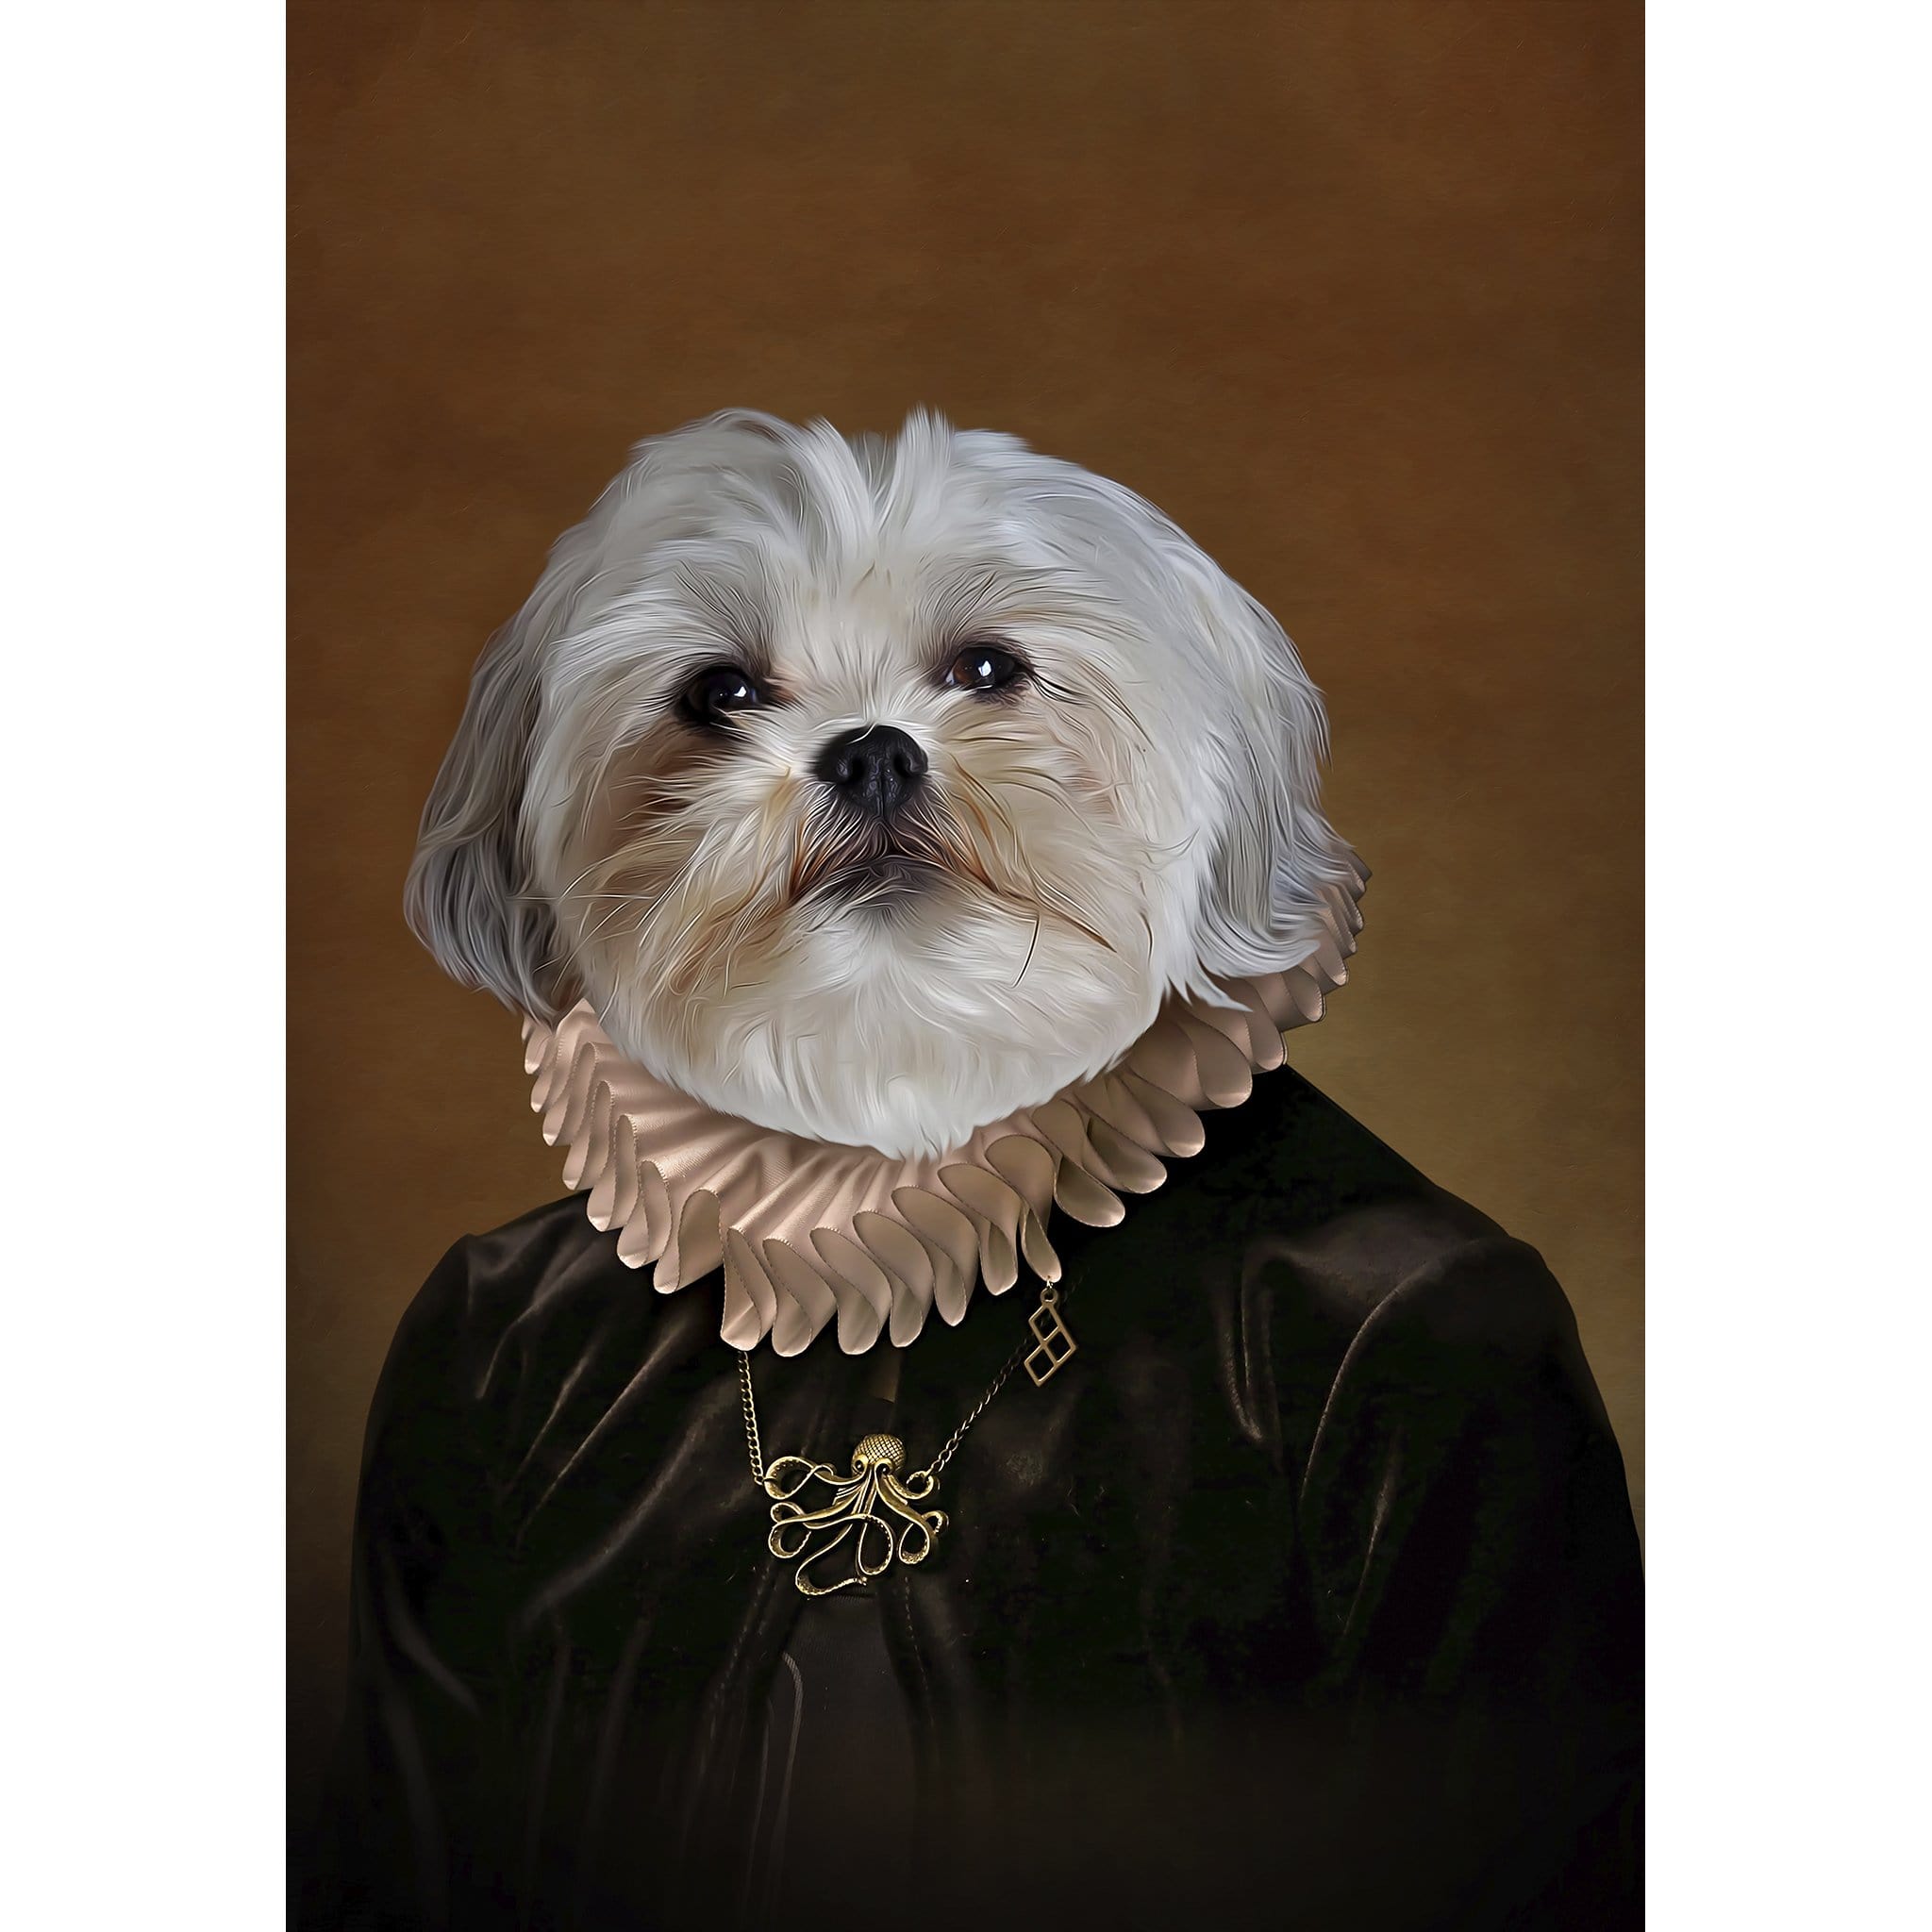 'The Duchess' Digital Portrait